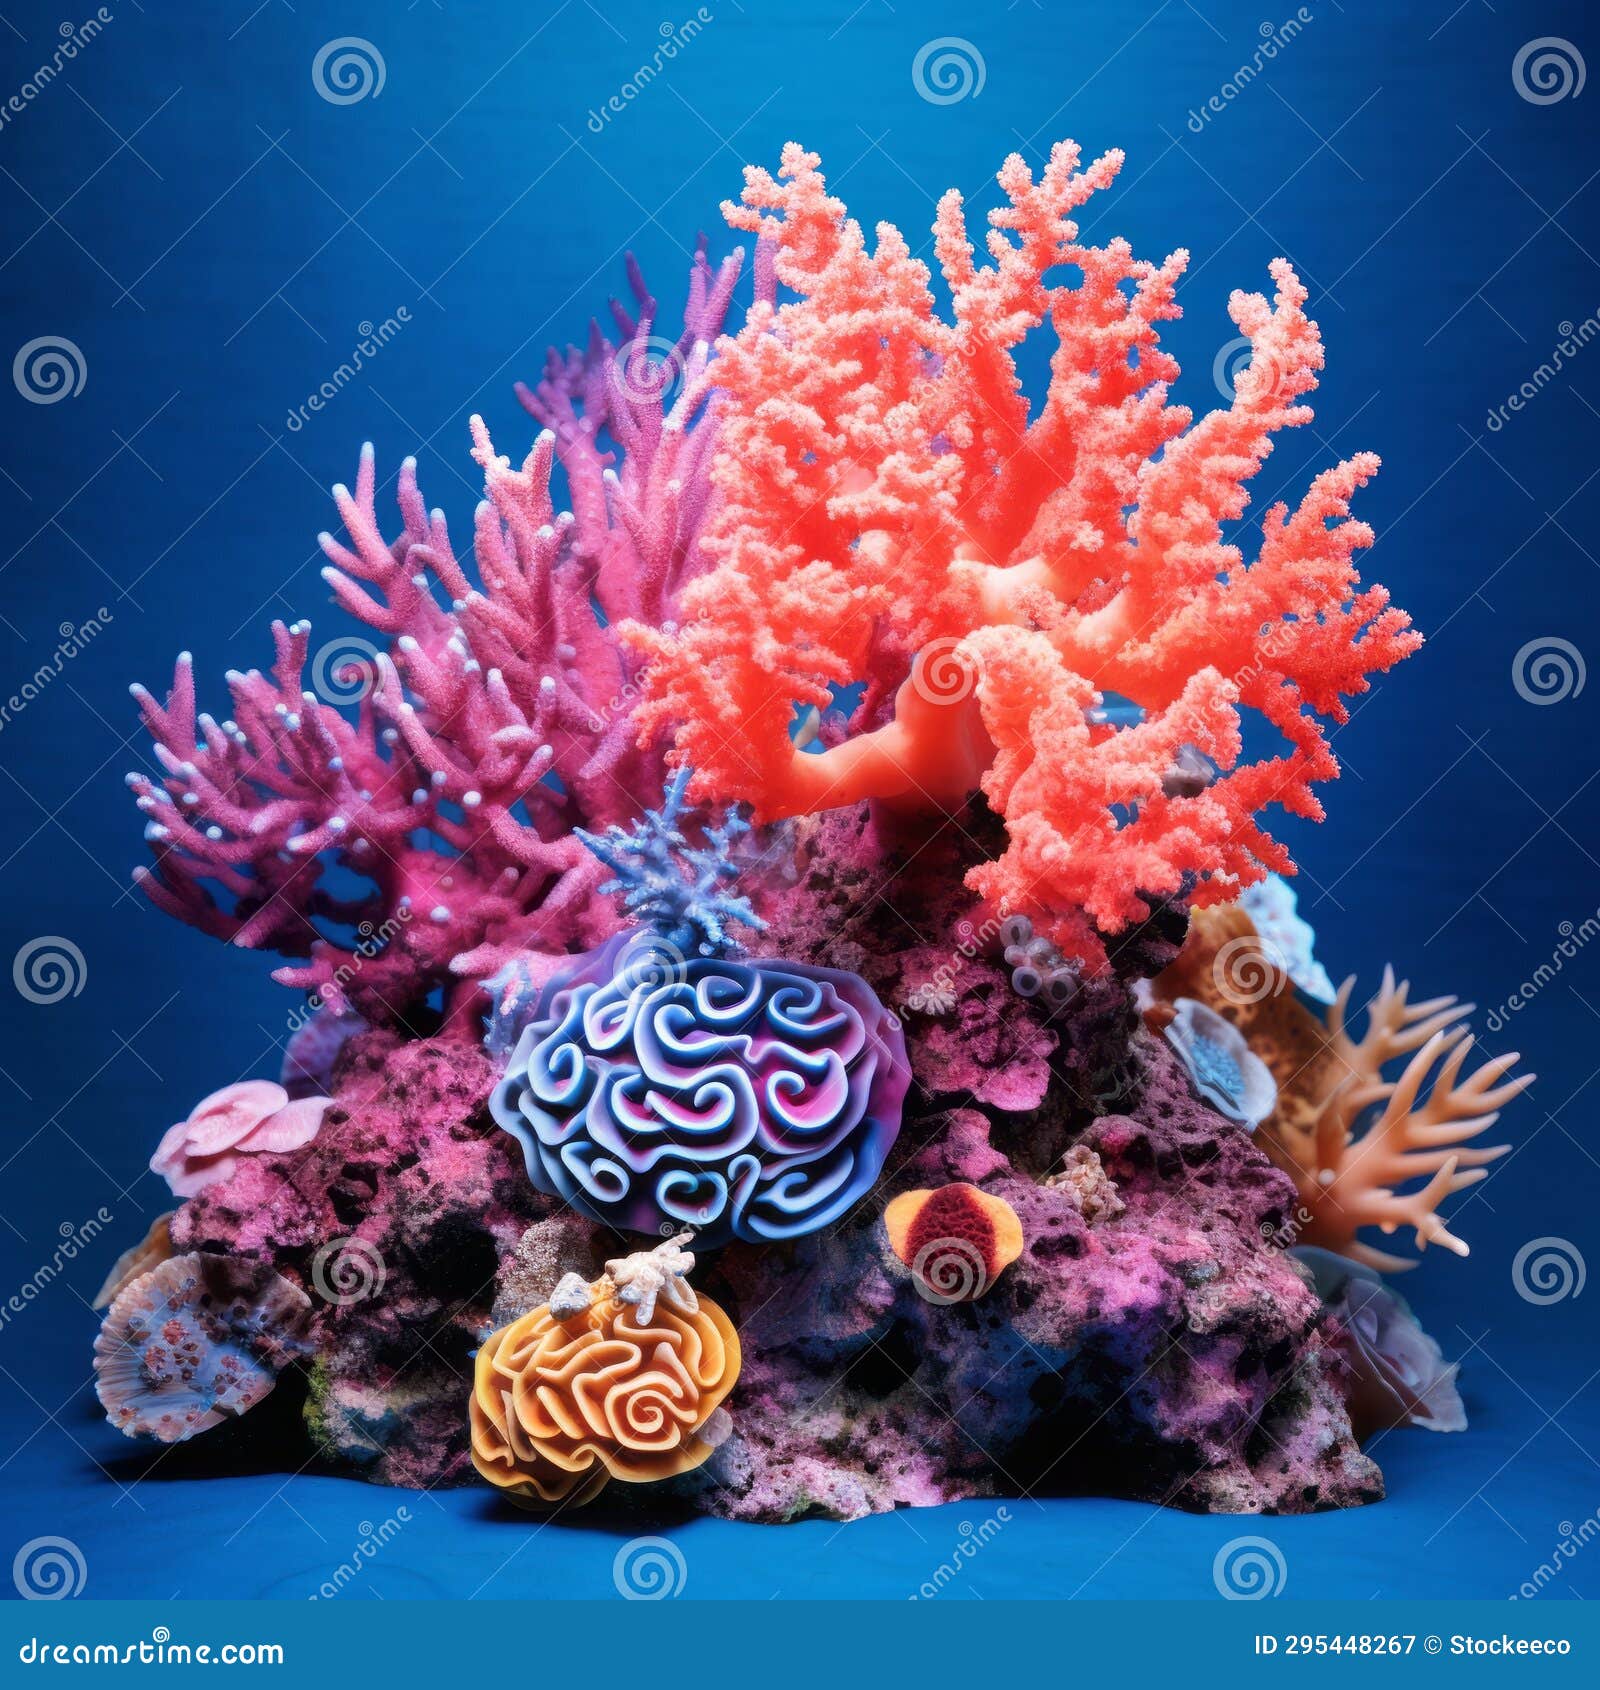 https://thumbs.dreamstime.com/z/vibrant-coral-reef-specimen-baroque-inspired-masterpiece-295448267.jpg